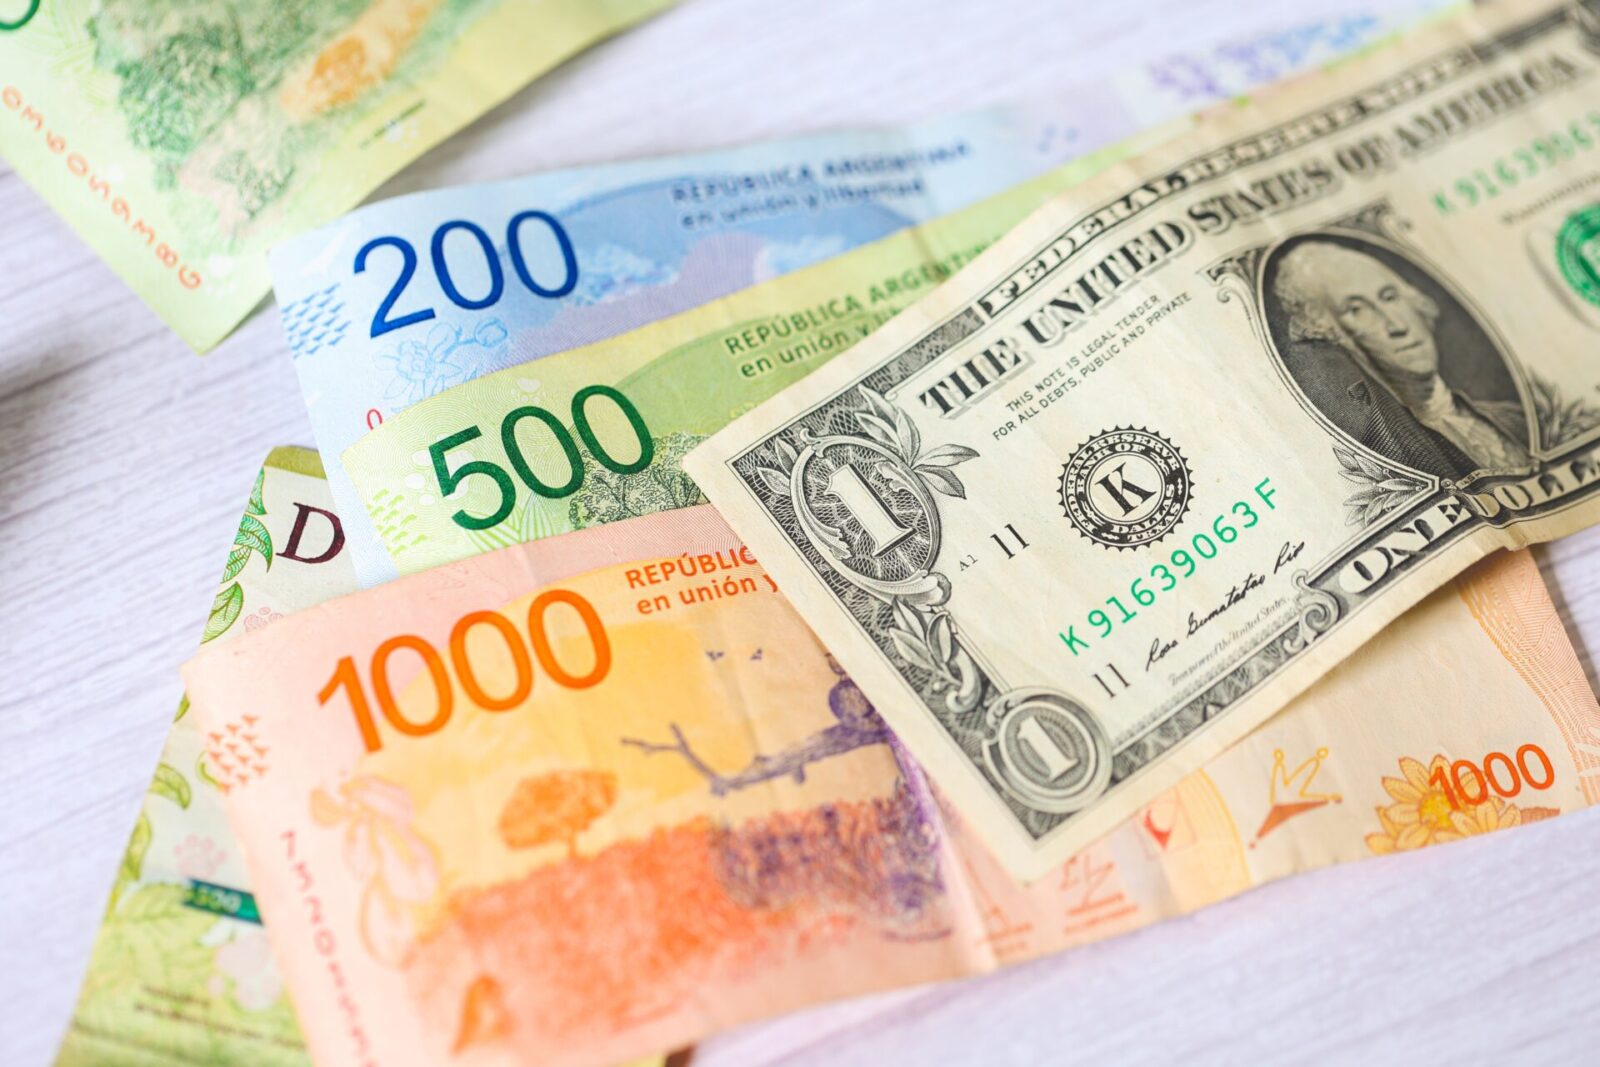 Argentine pesos nestle next to US dollars